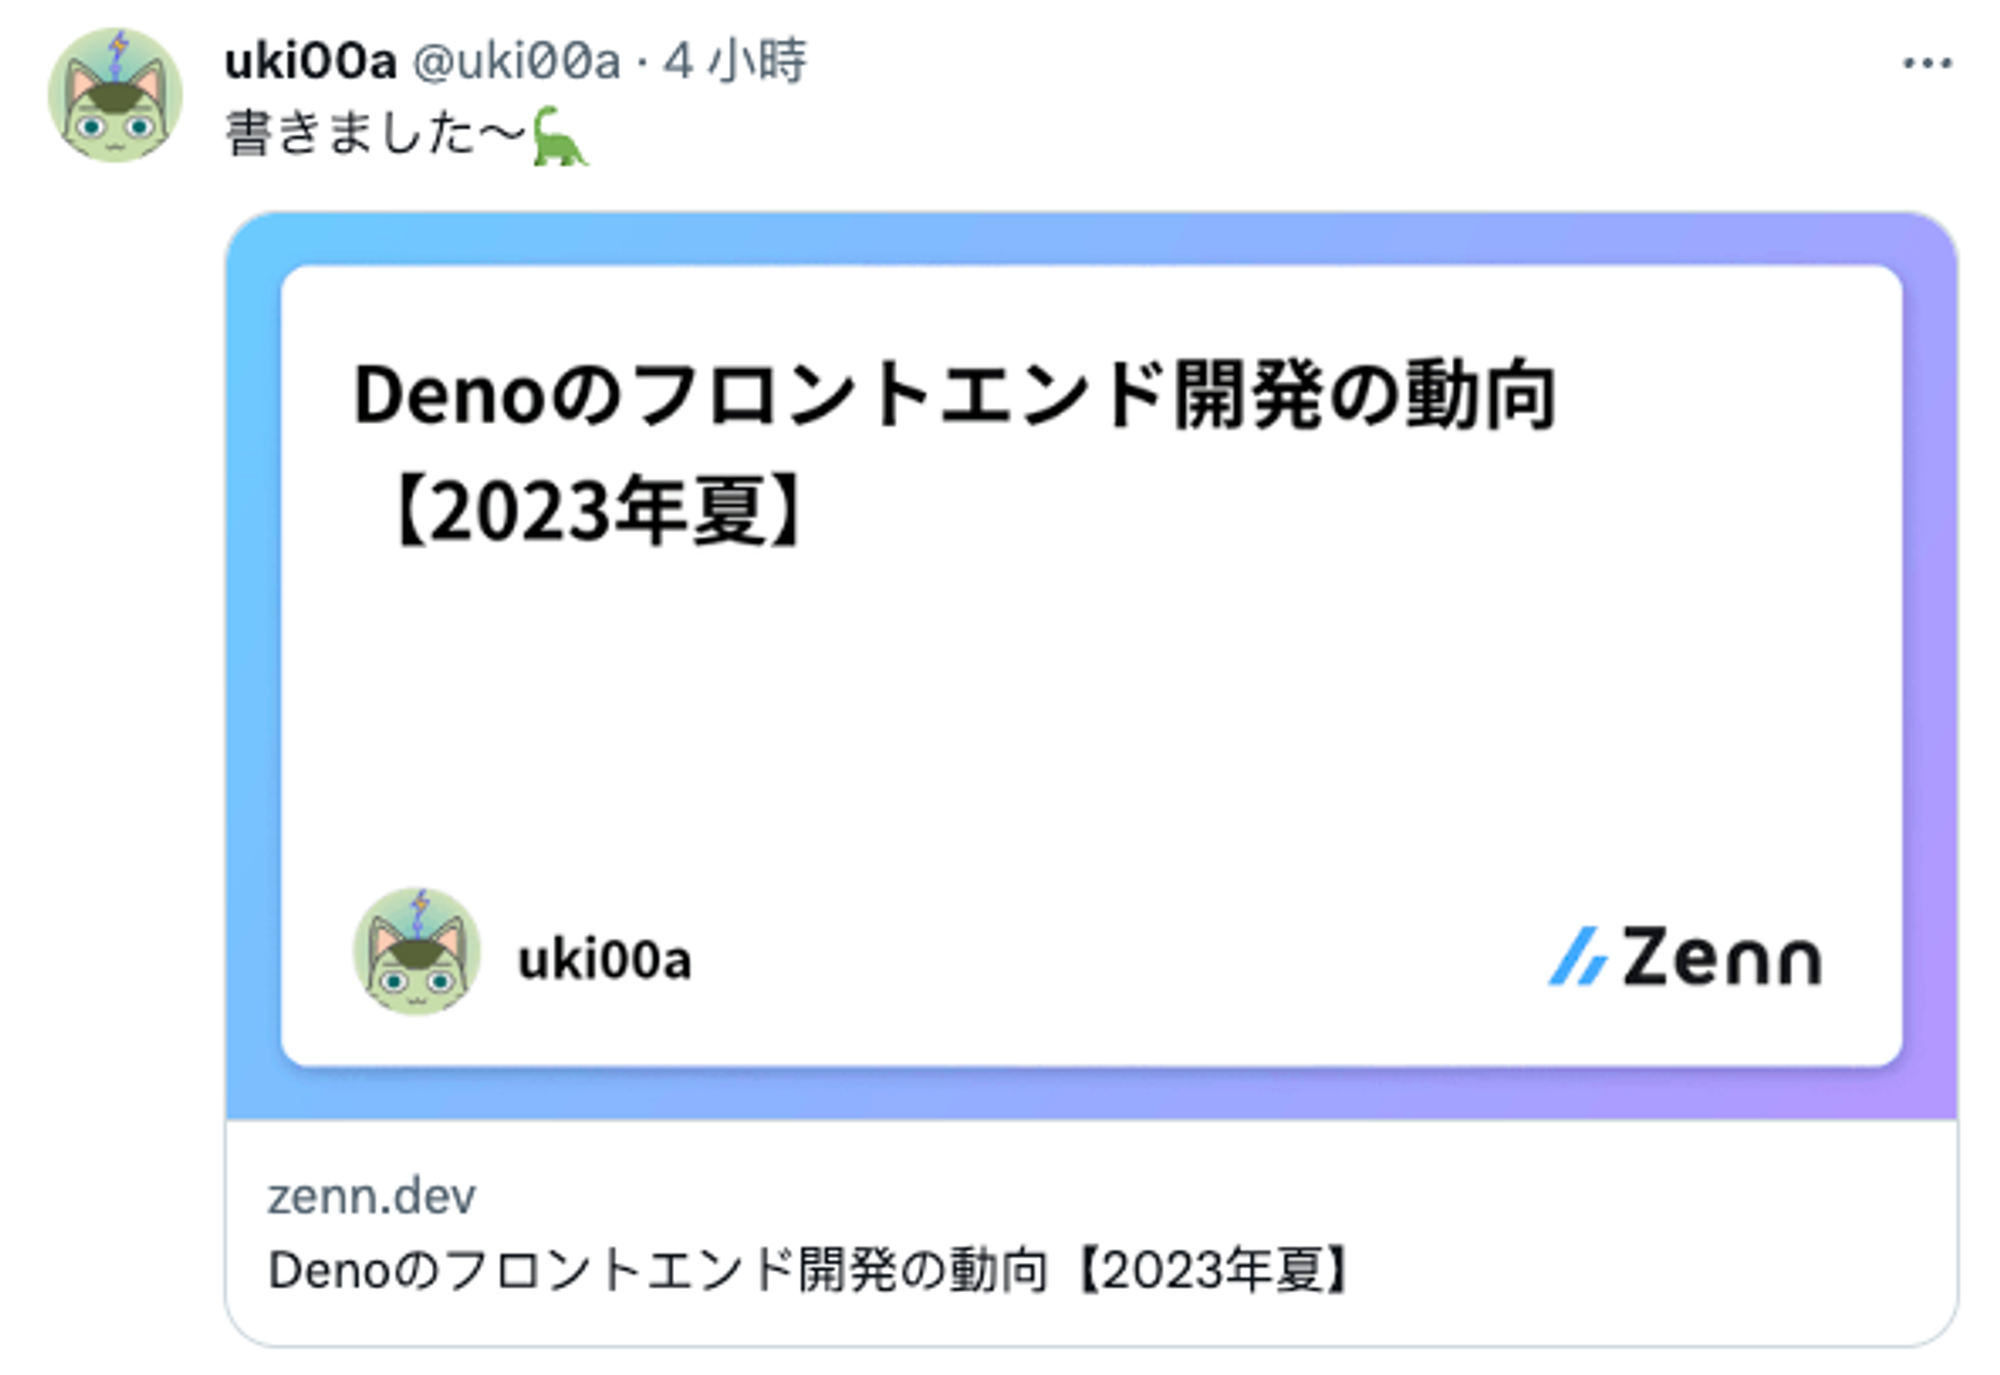 ref: https://zenn.dev/uki00a/articles/frontend-development-in-deno-2023-summer